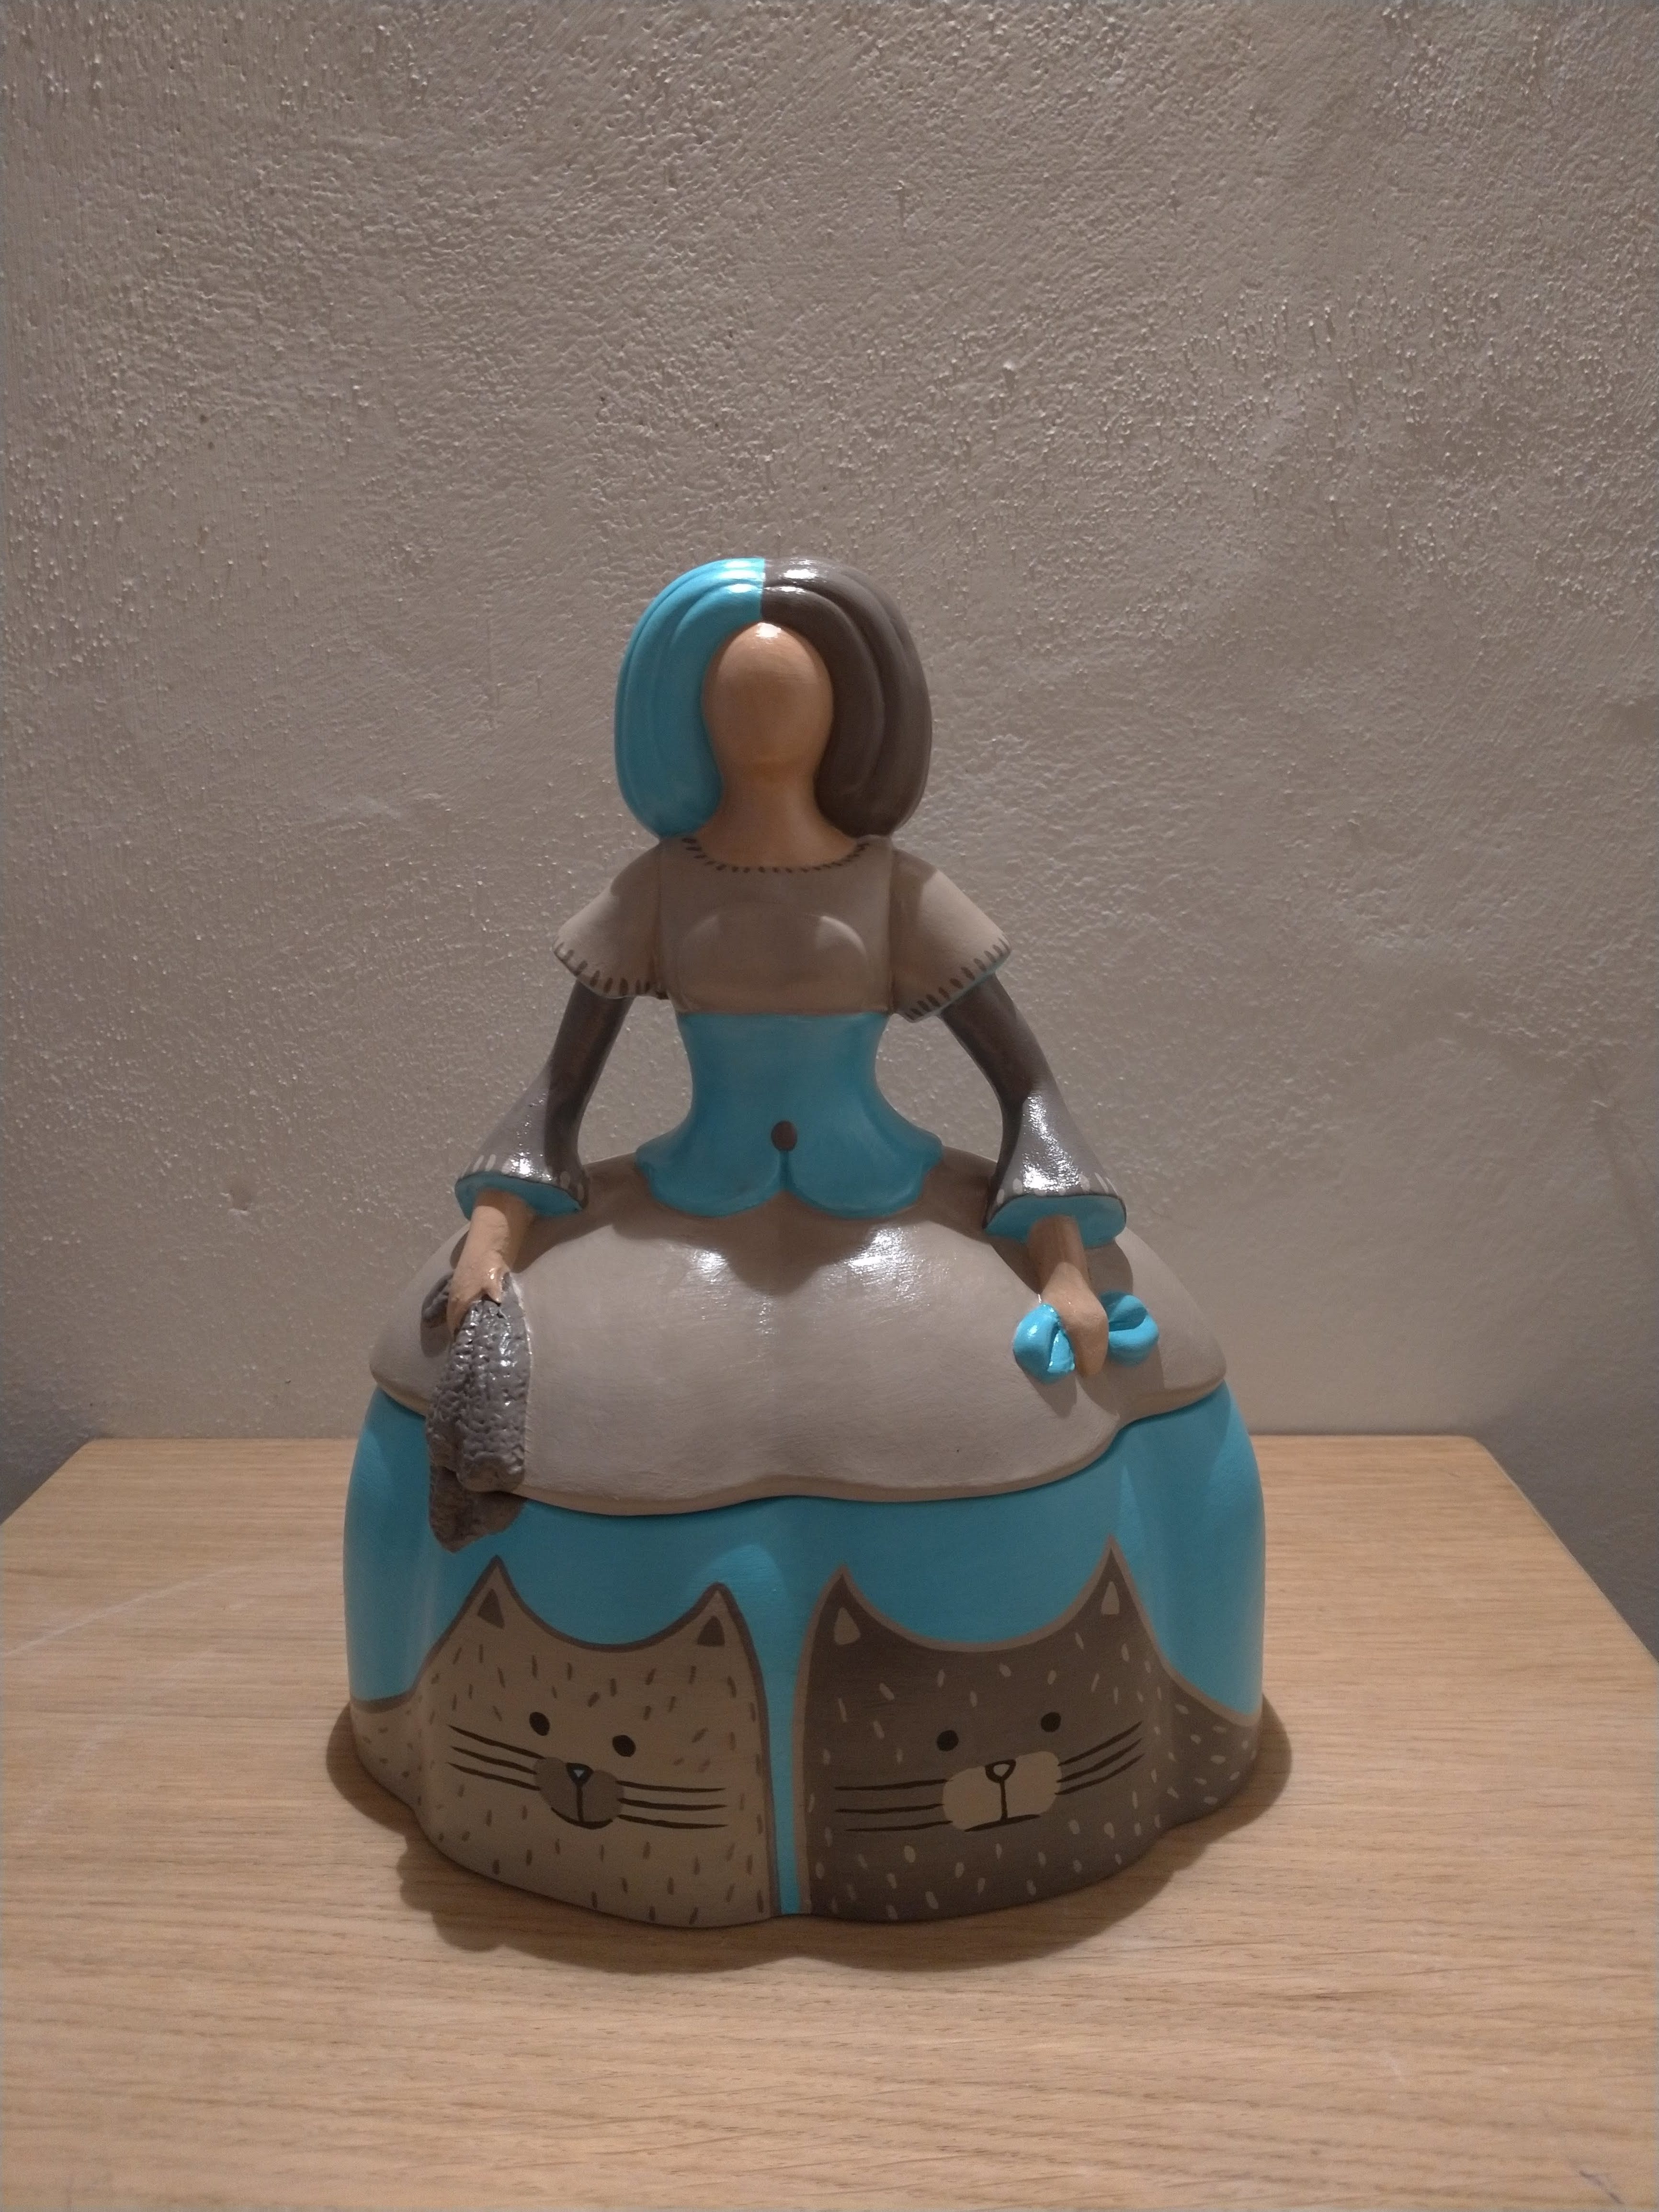 Dama portagioie in ceramica / Jewel case figurine